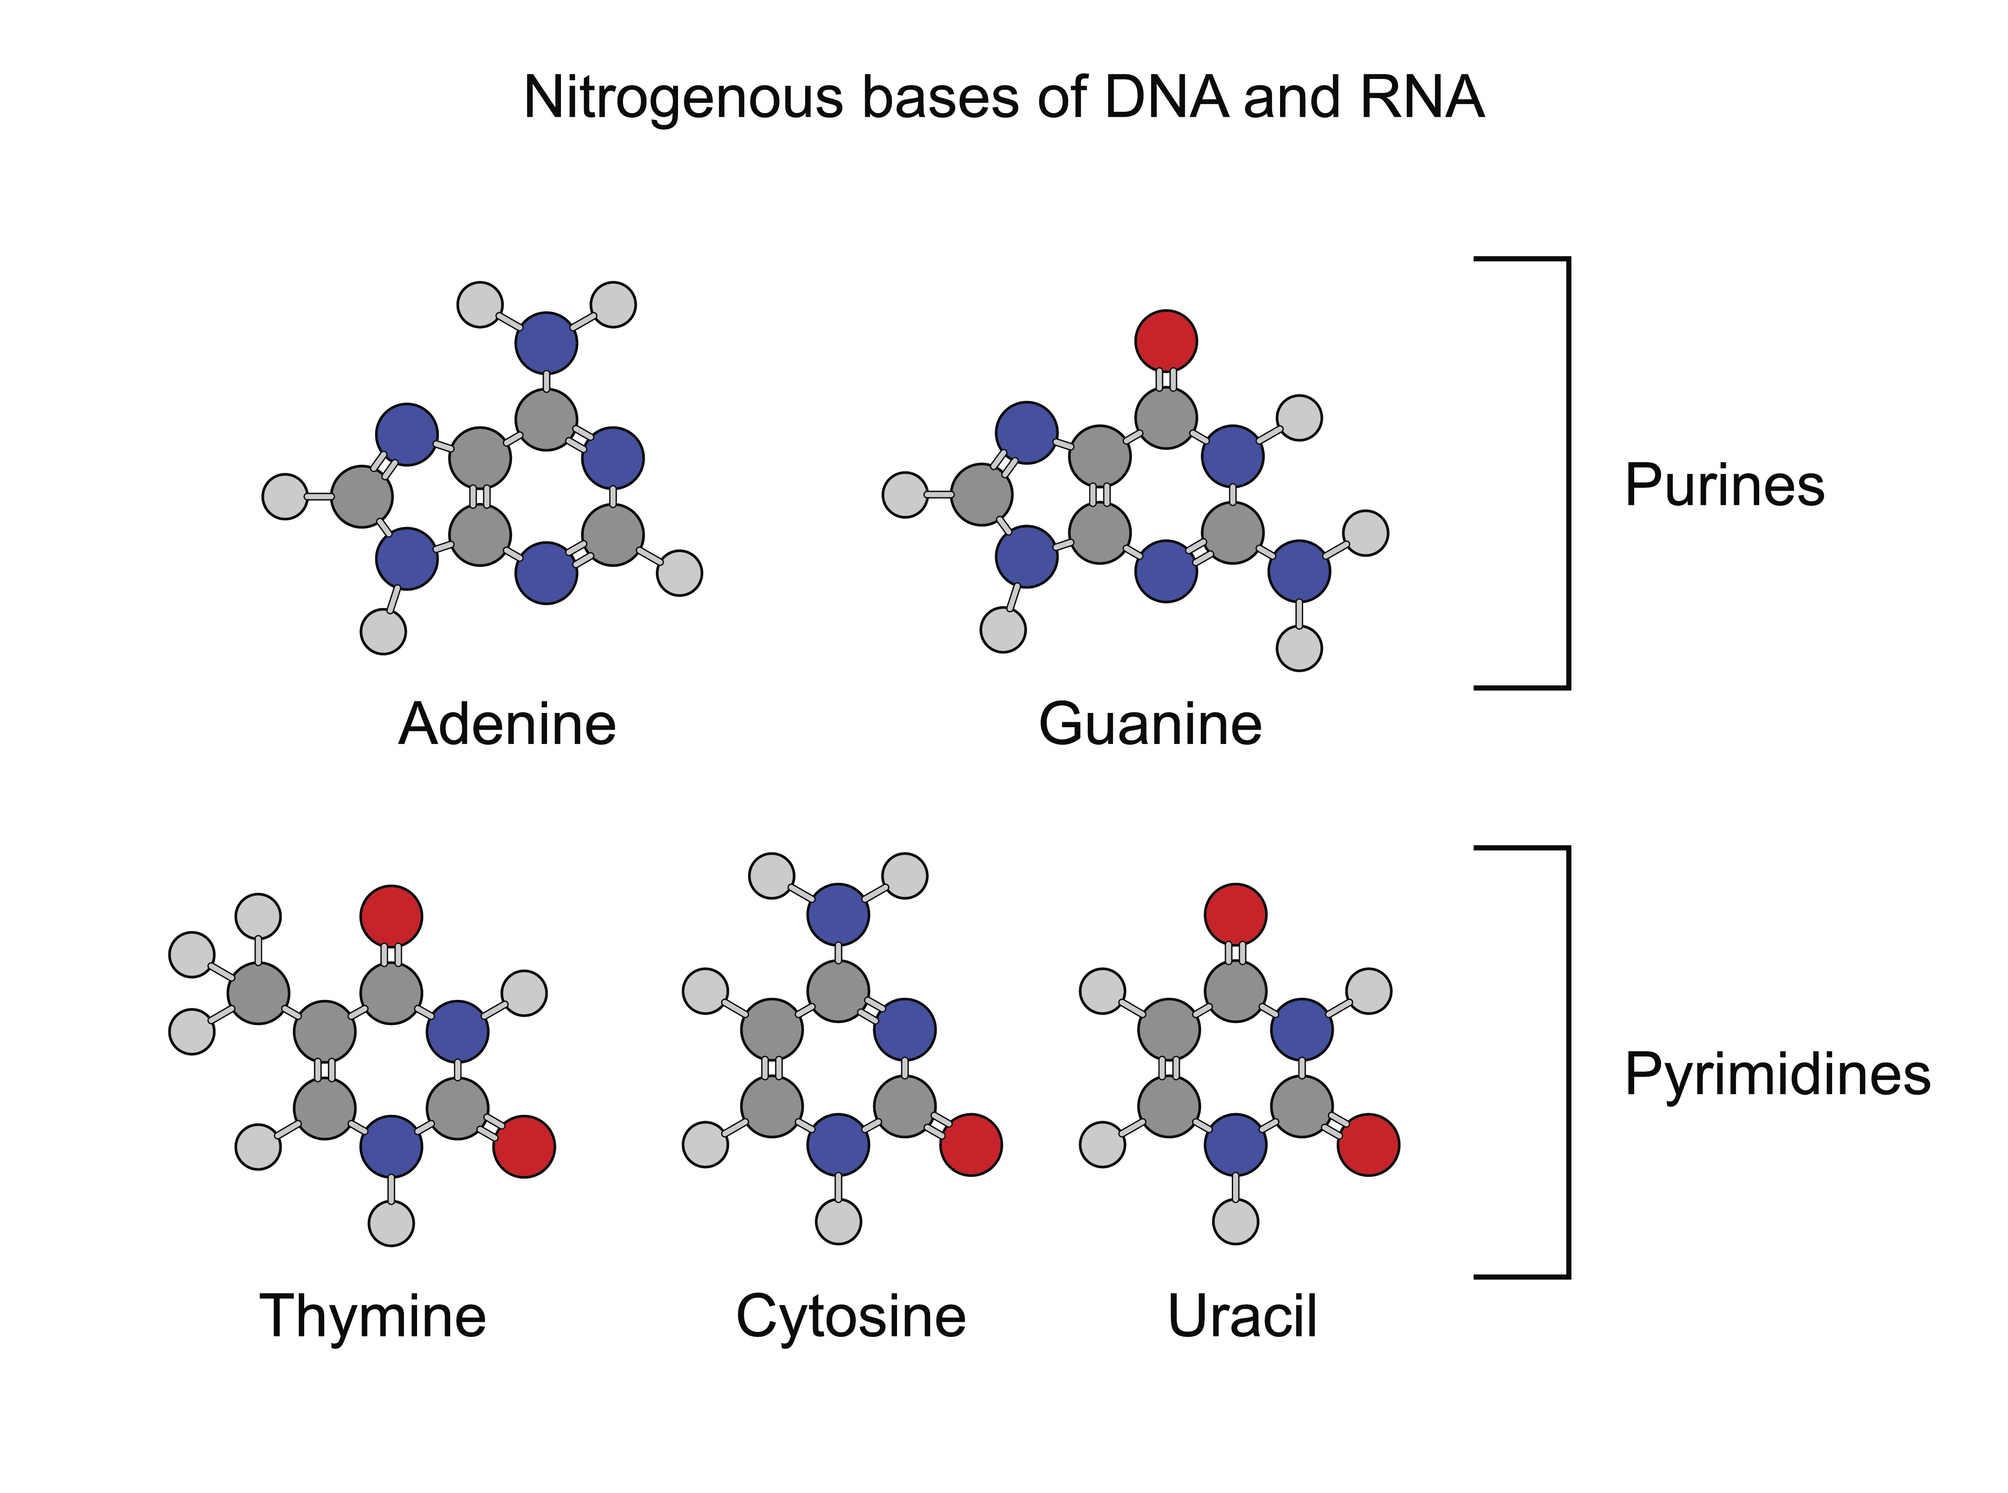 Purines are adenine and guanine, pyramidines are thymine, cytosine, and uracil